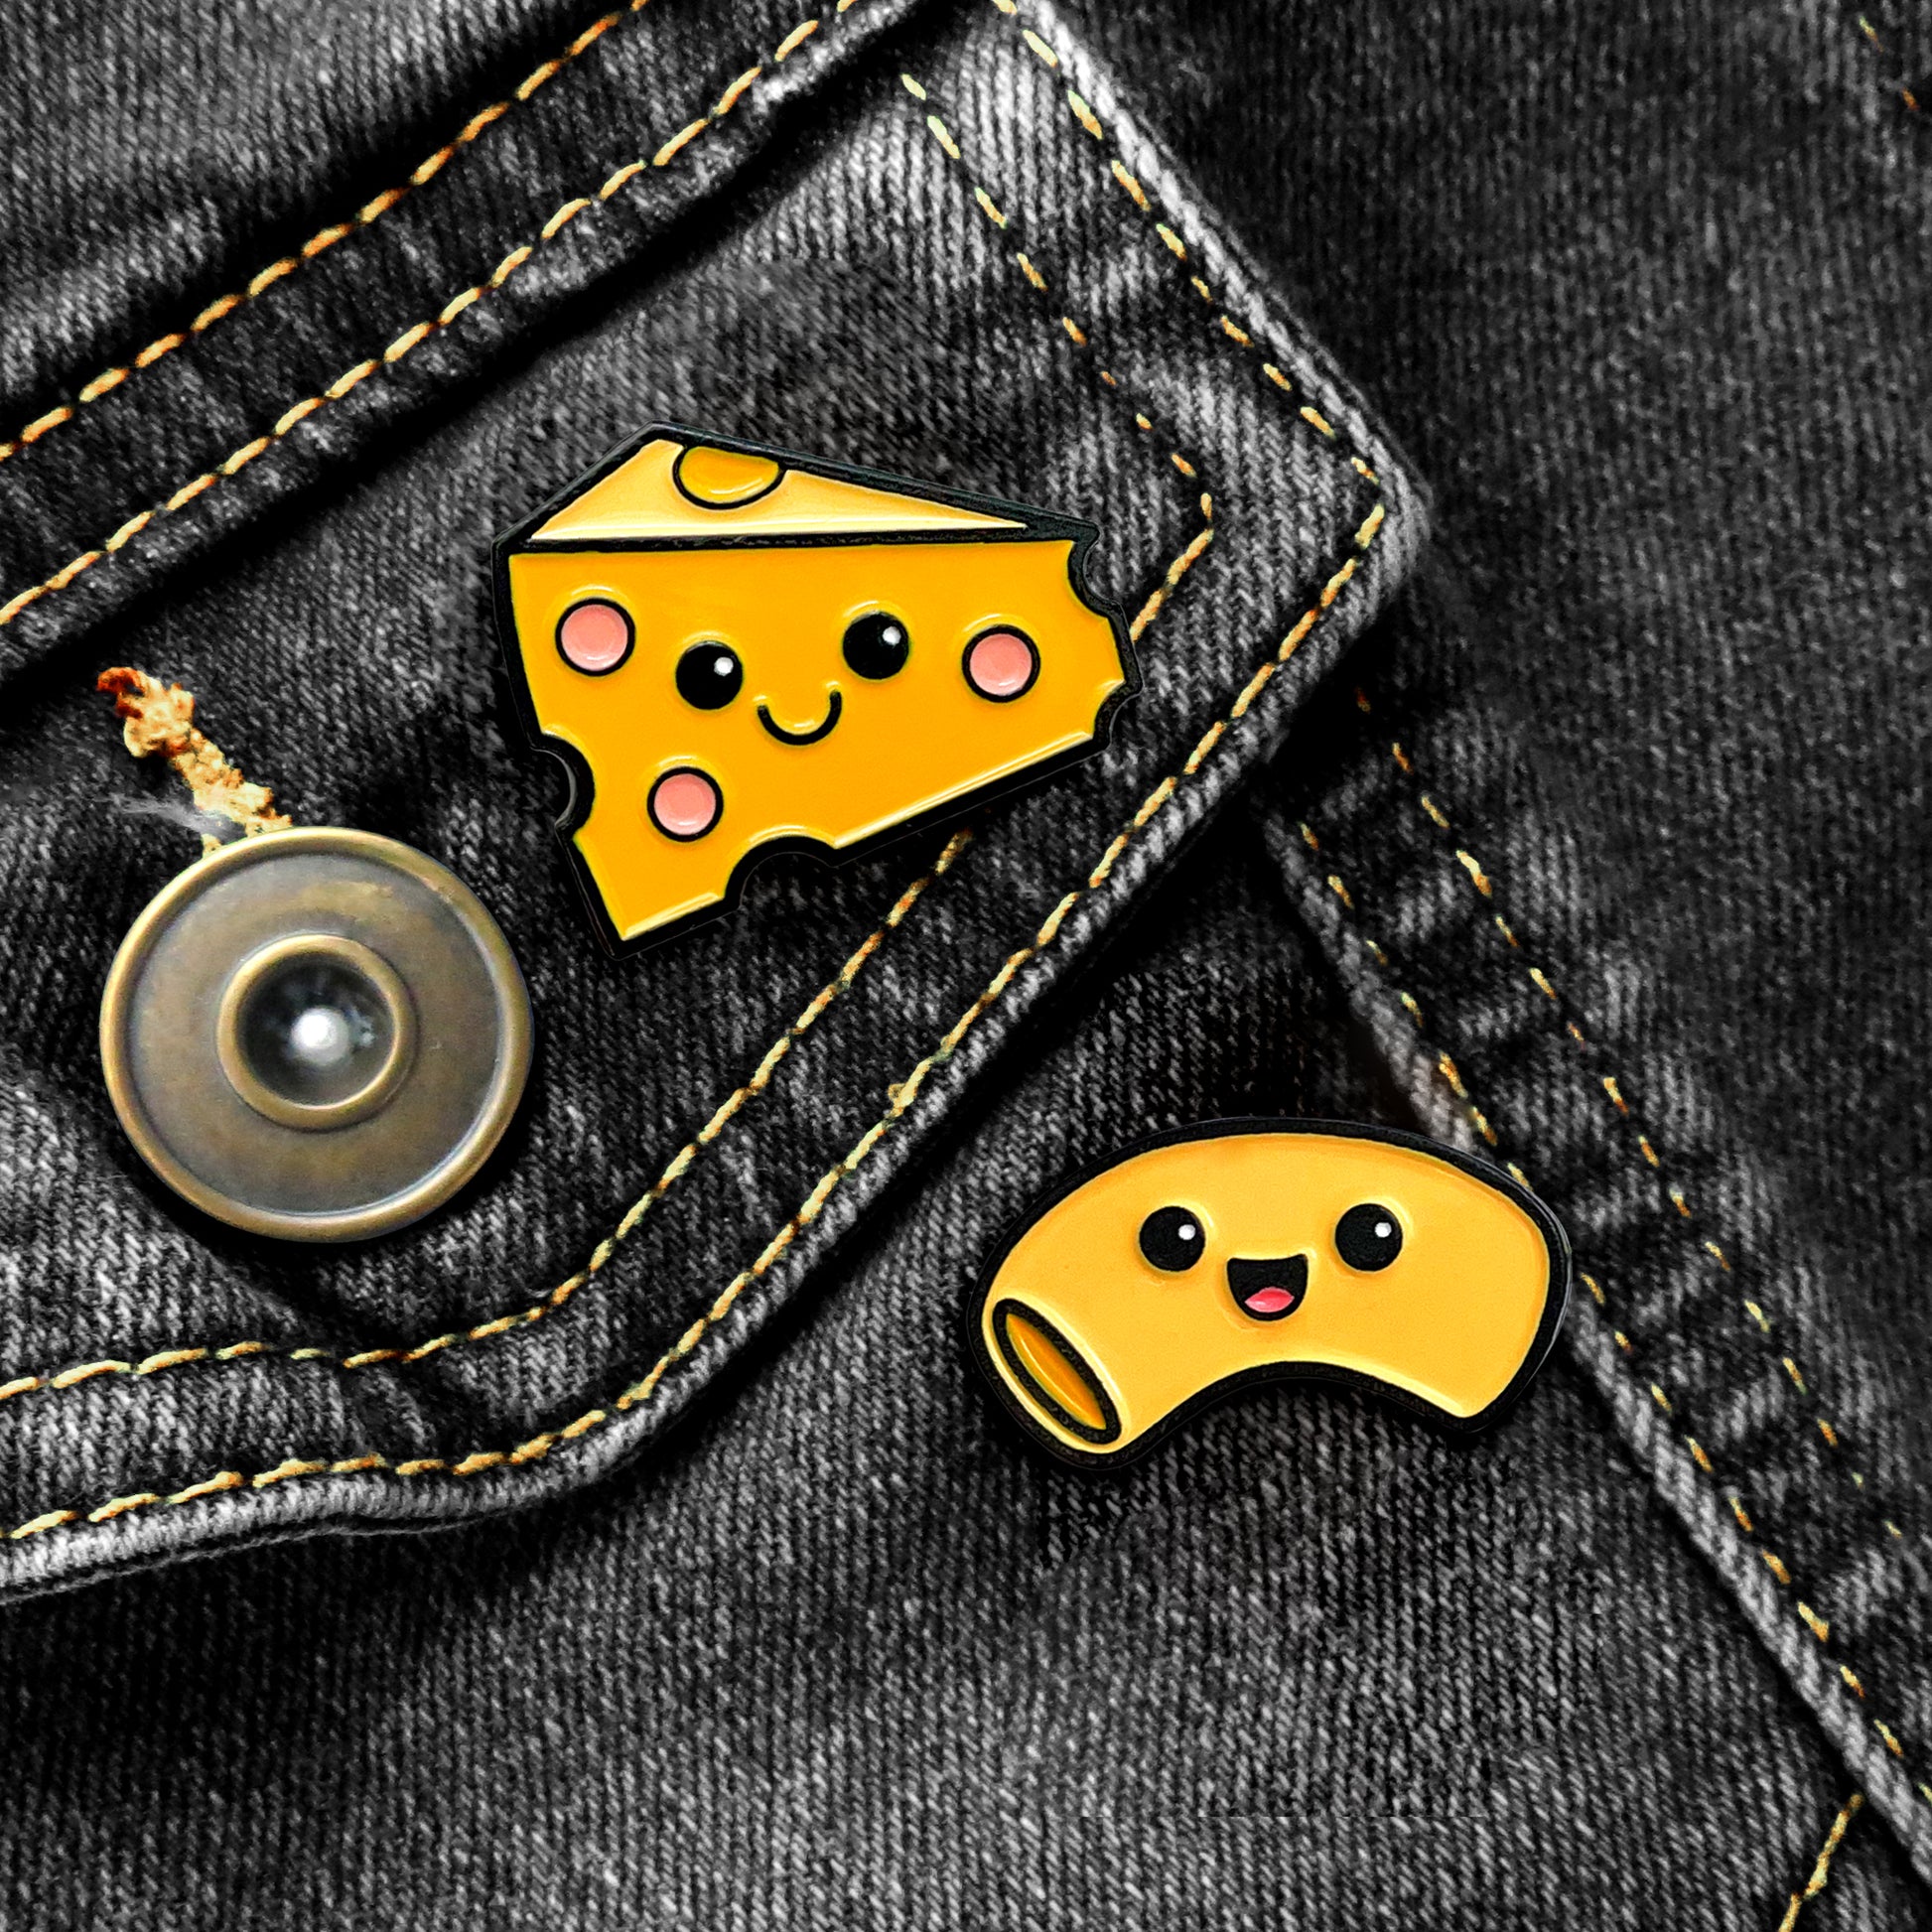 Mac and Cheese enamel pins on black jean jacket pocket